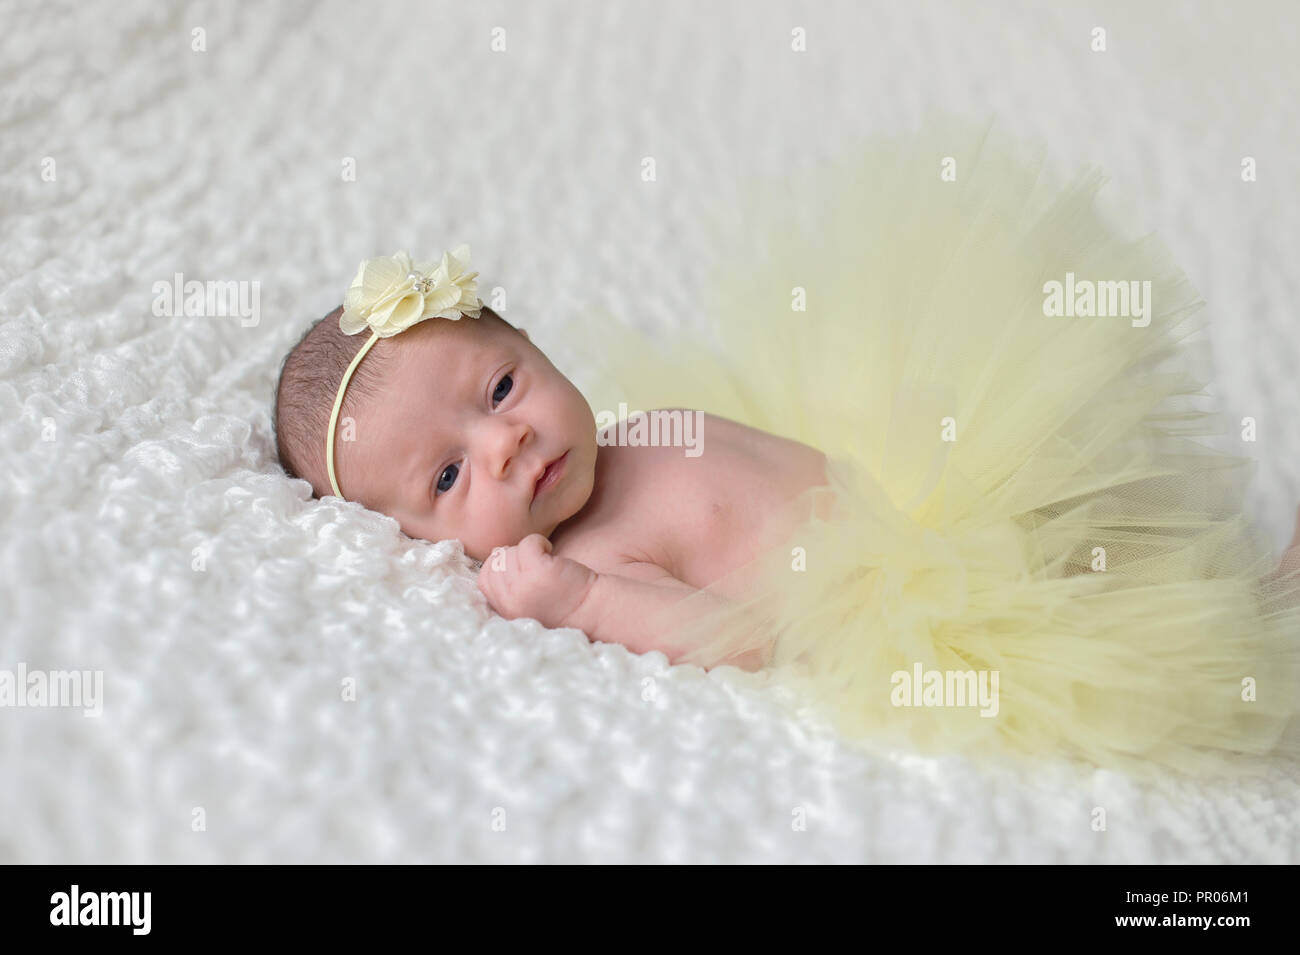 An alert, 2 week old newborn baby girl wearing a yellow headband and tutu. Stock Photo